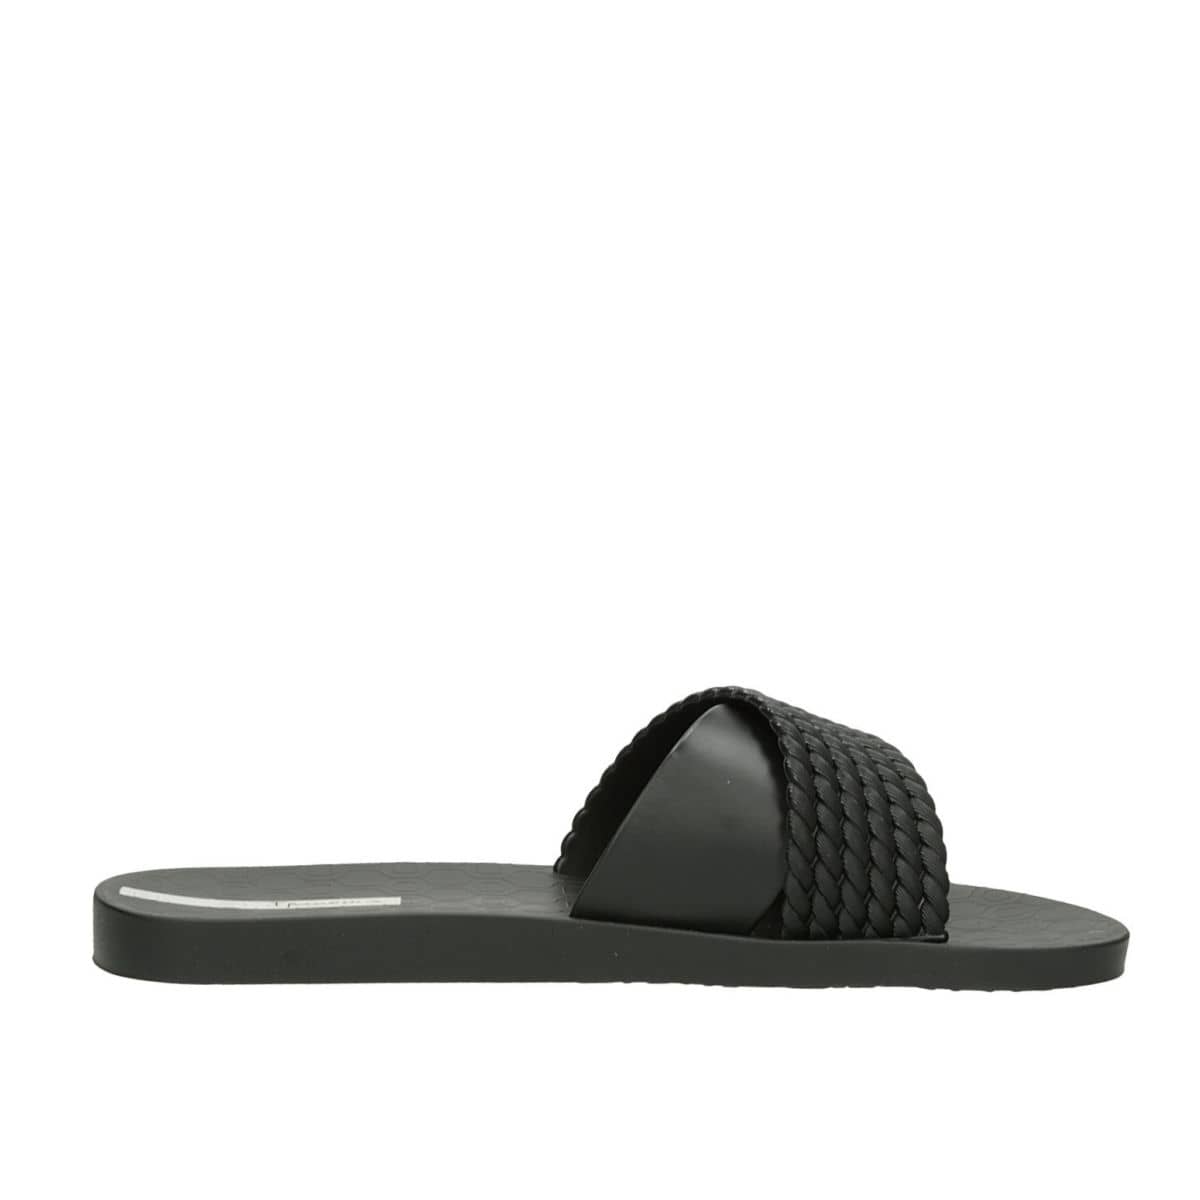 Ipanema women's stylish slippers - black | Robel.shoes